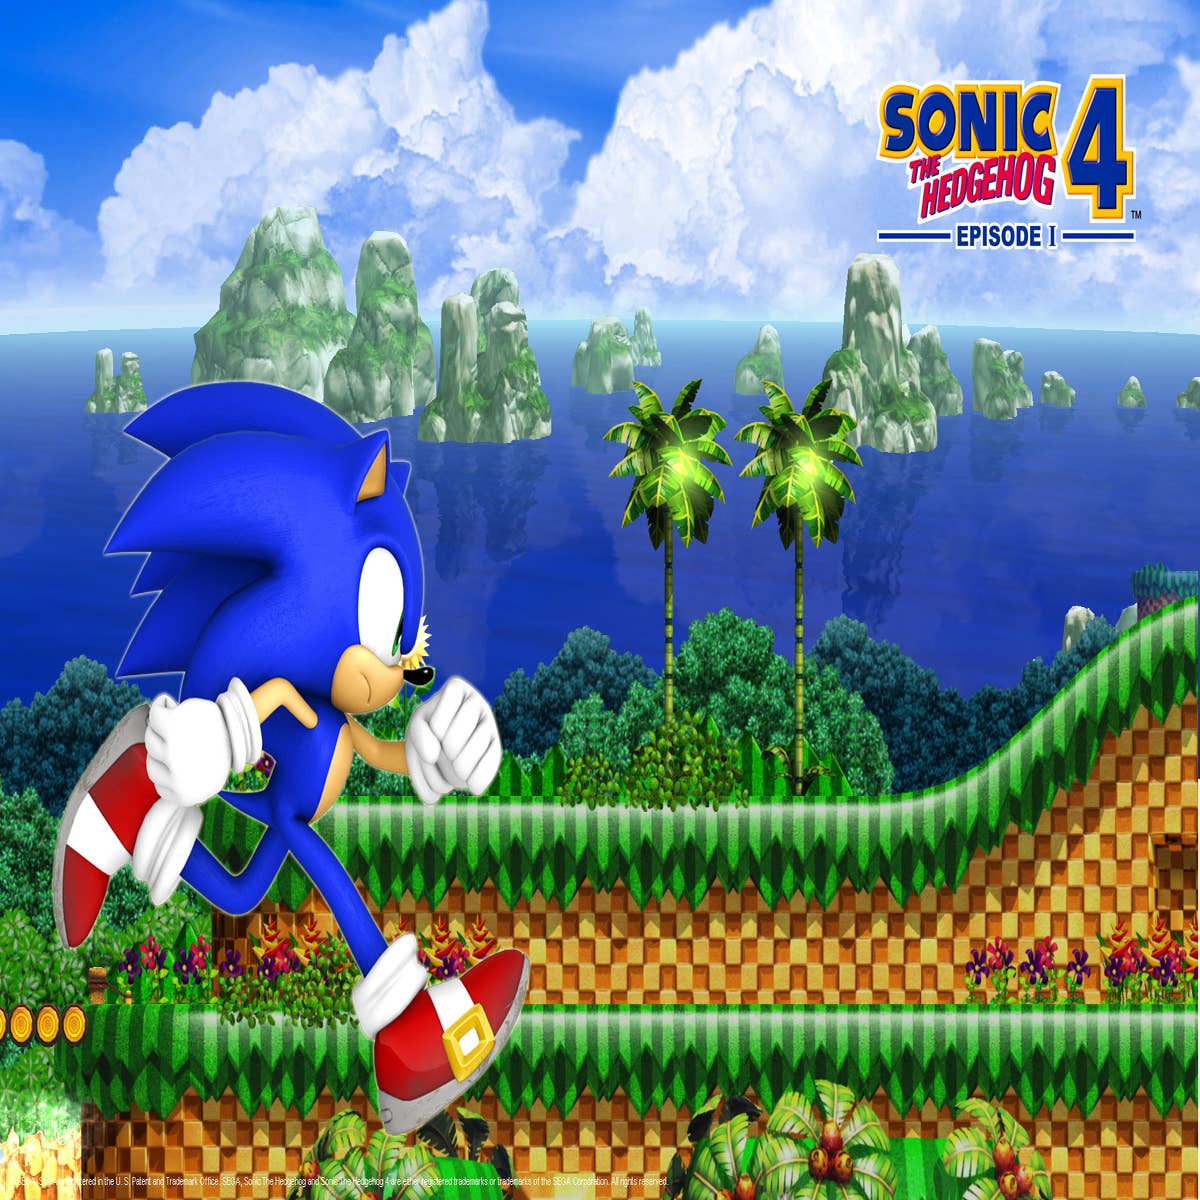 Sonic 4 Episode 1 Music: Splash Hill Zone Act 1 